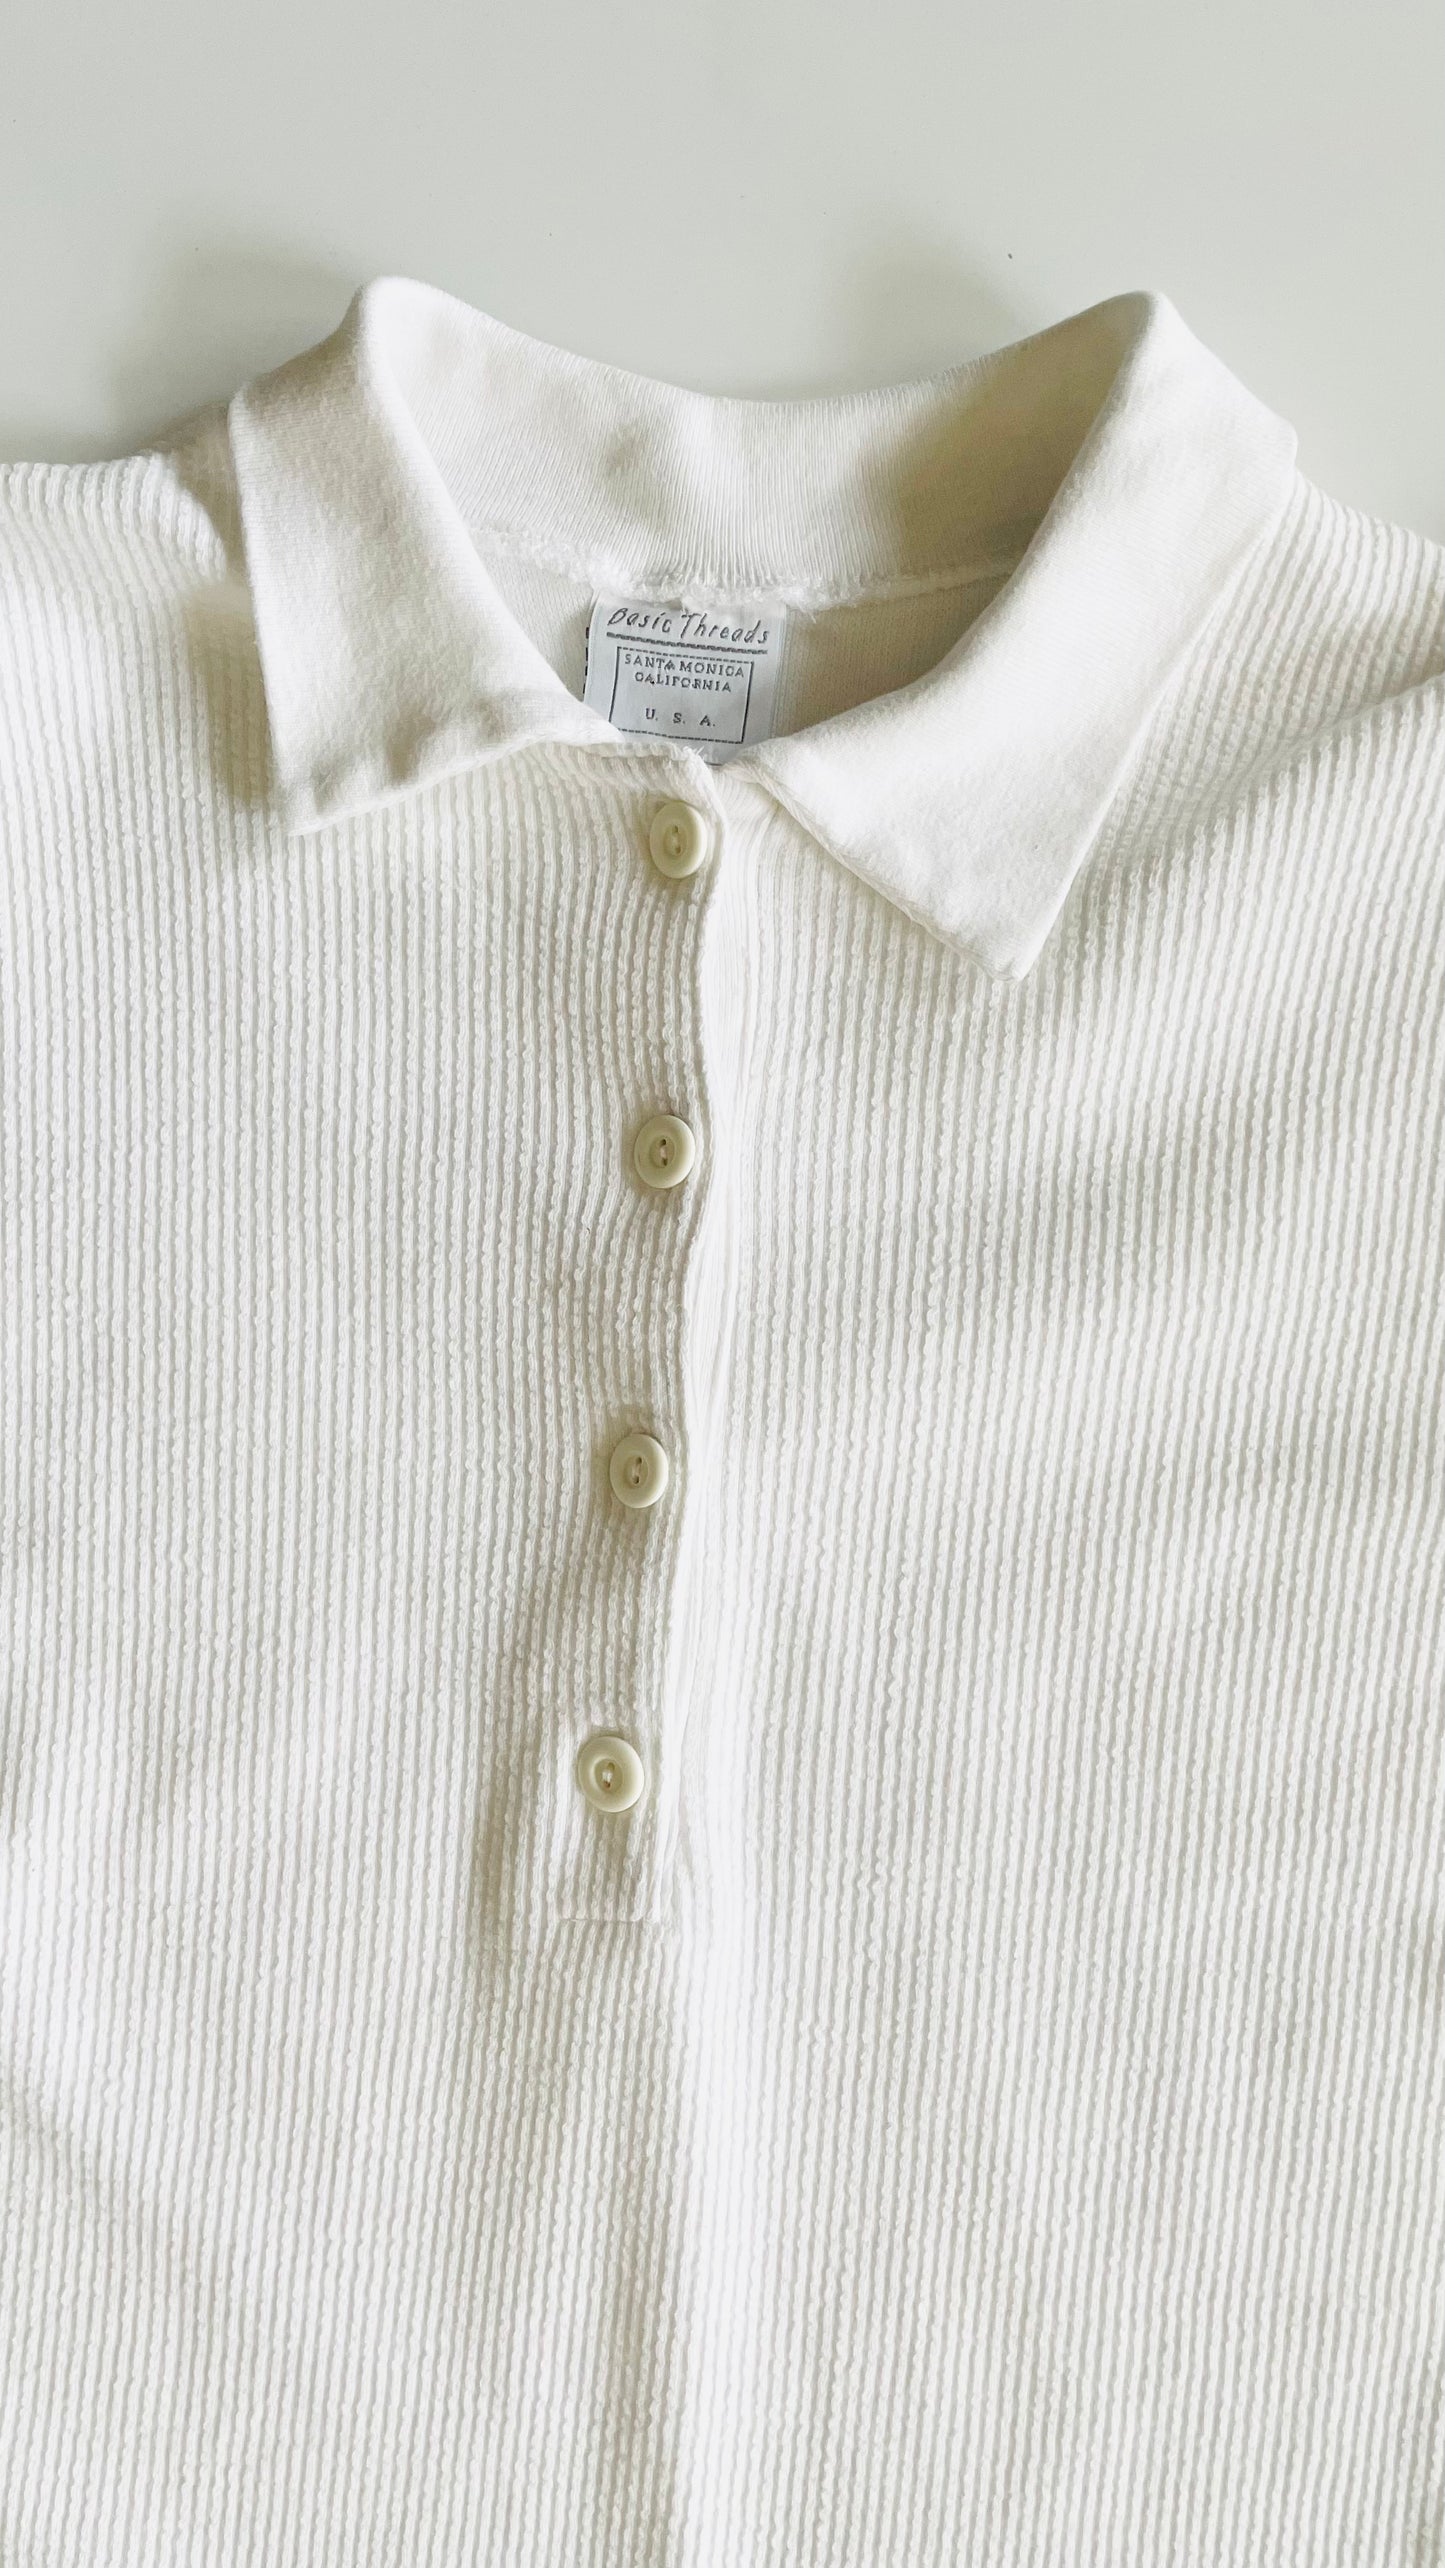 Vintage 90s white short sleeve maxi polo shirt dress - Size S